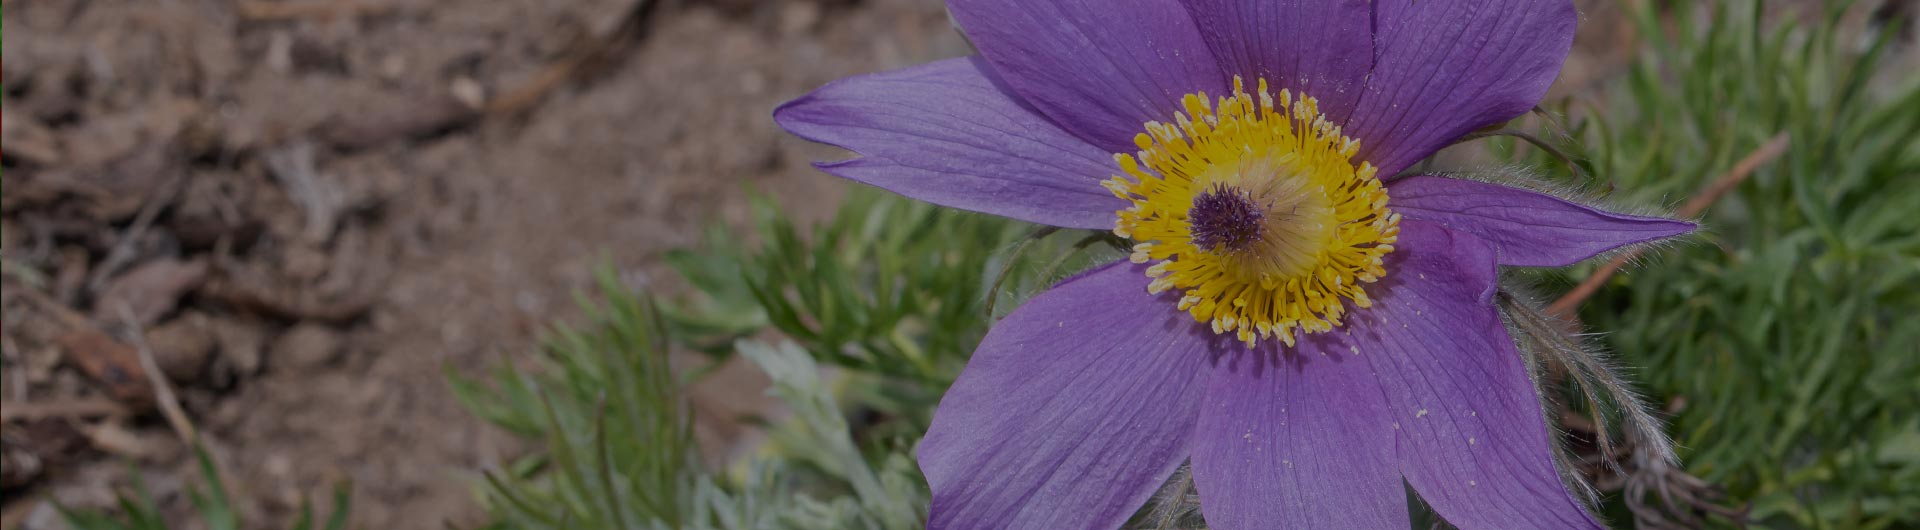 American Pasque flower, South Dakota's state flower.